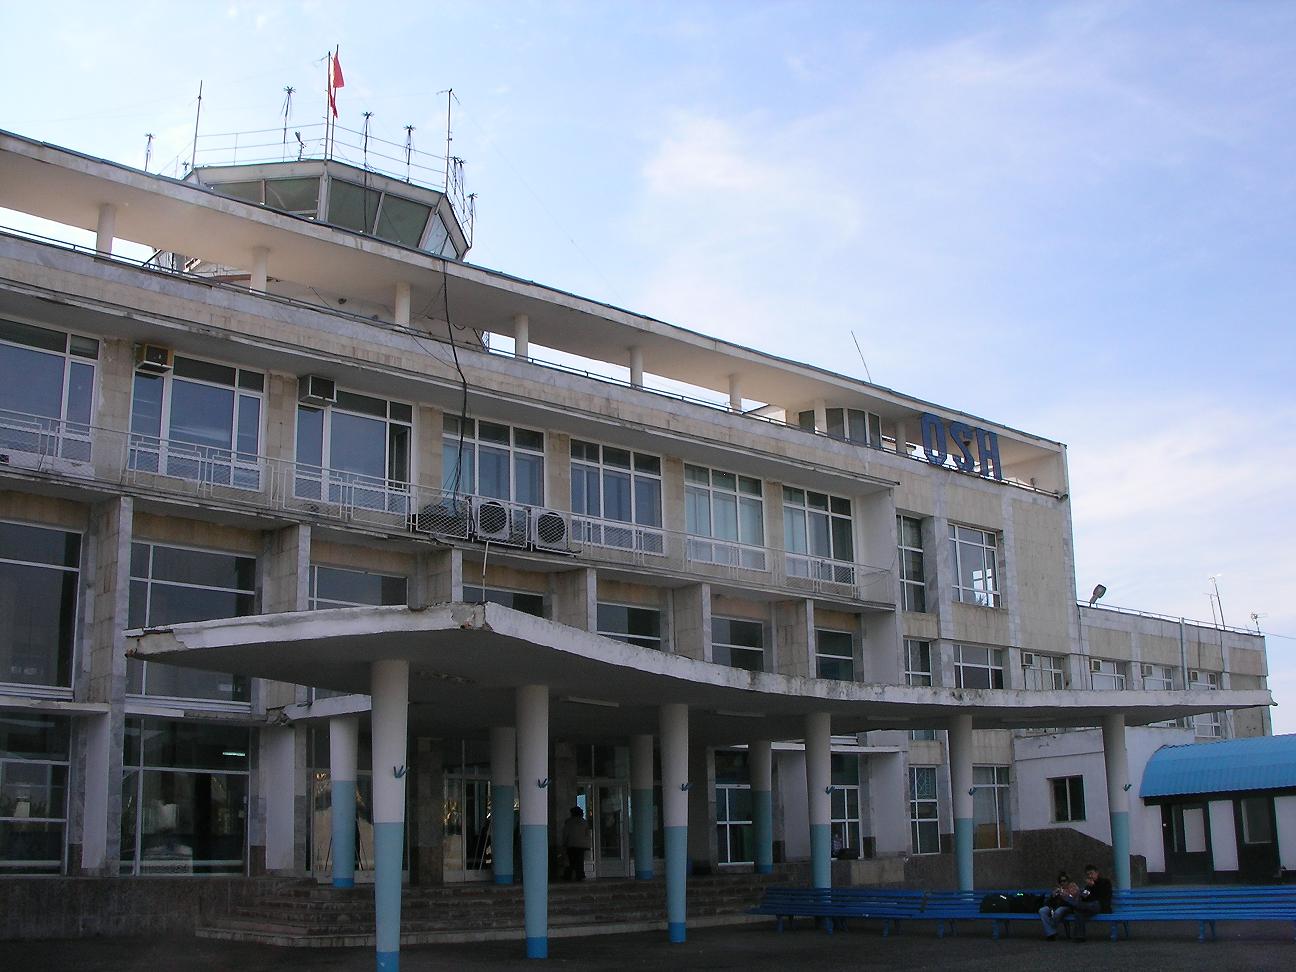 Аэропорт Ош (Osh Airport).1